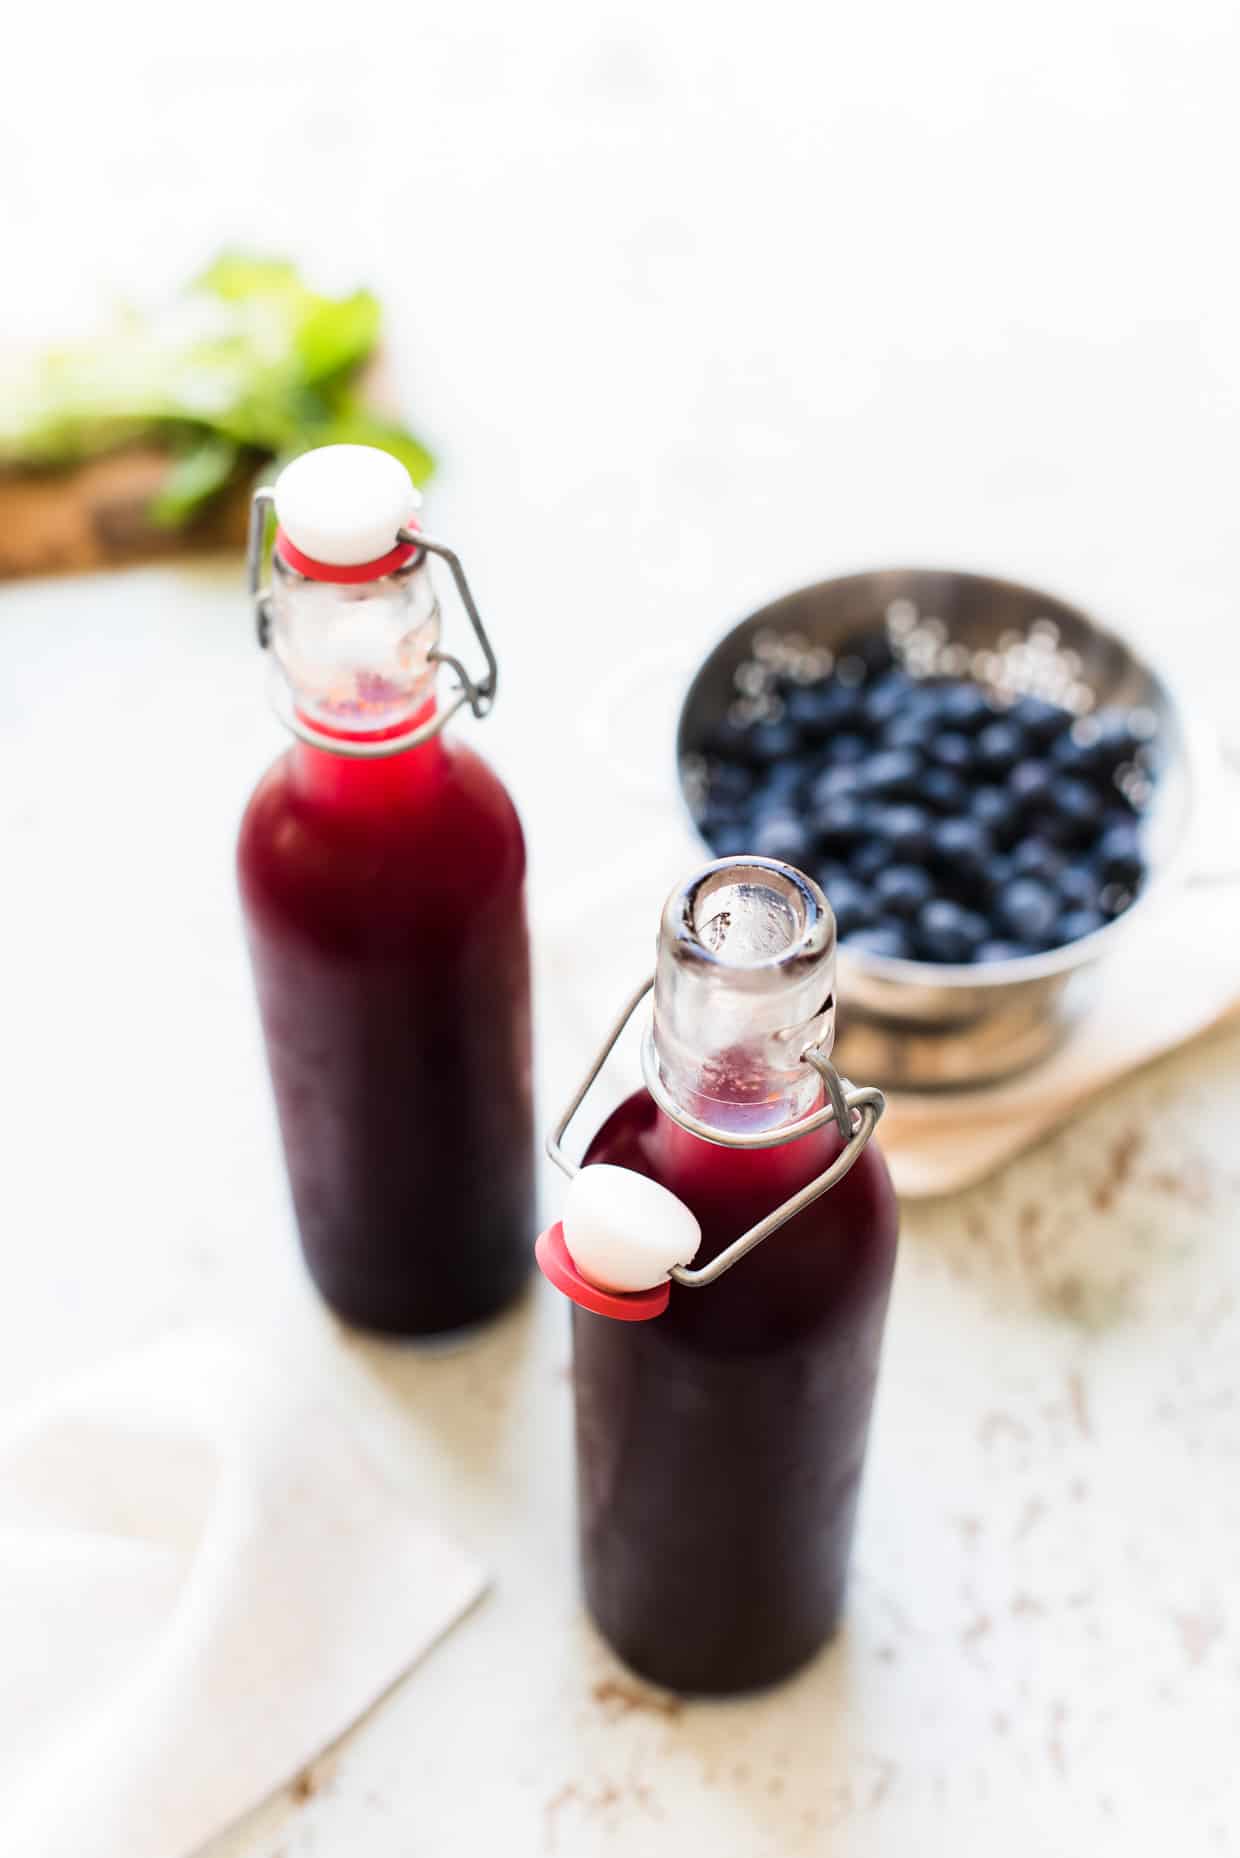 Blueberry syrup for Blueberry Ginger Basil Soda.